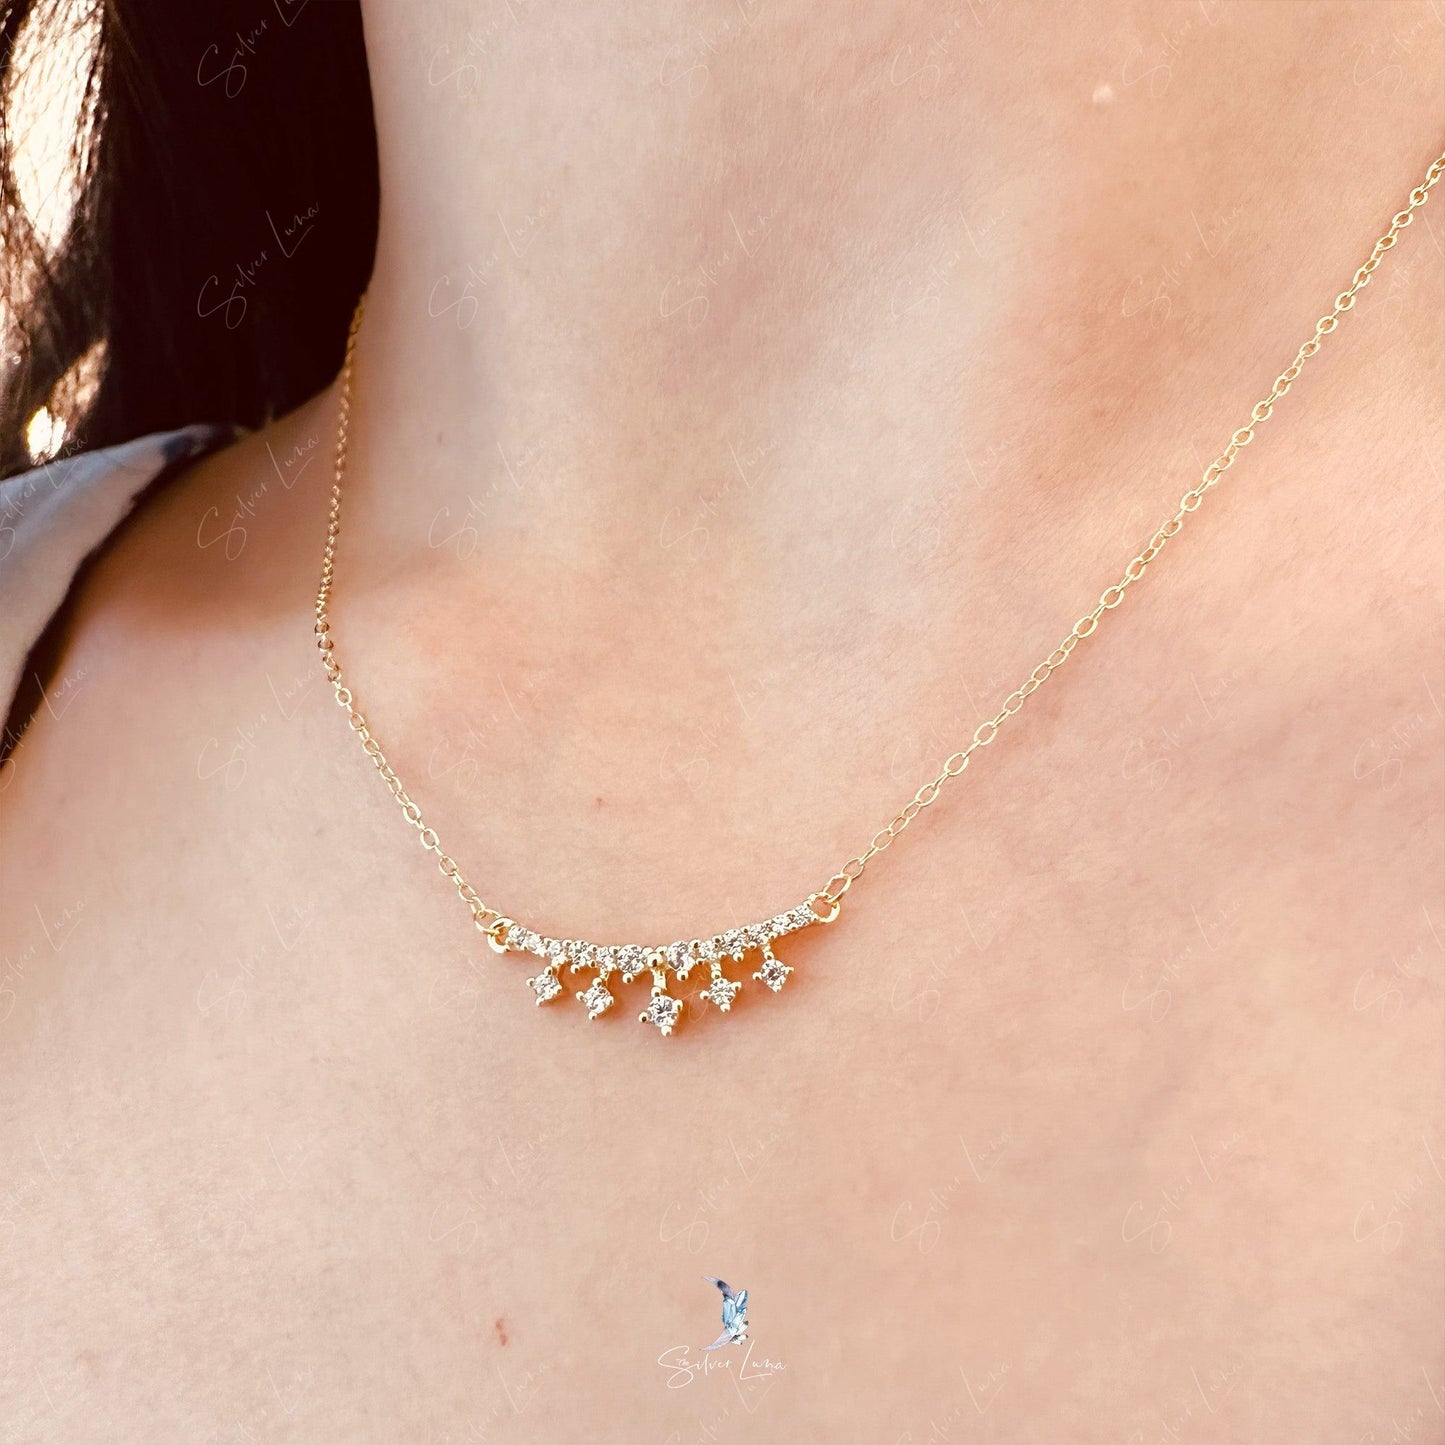 Dainty tiara pendant necklace